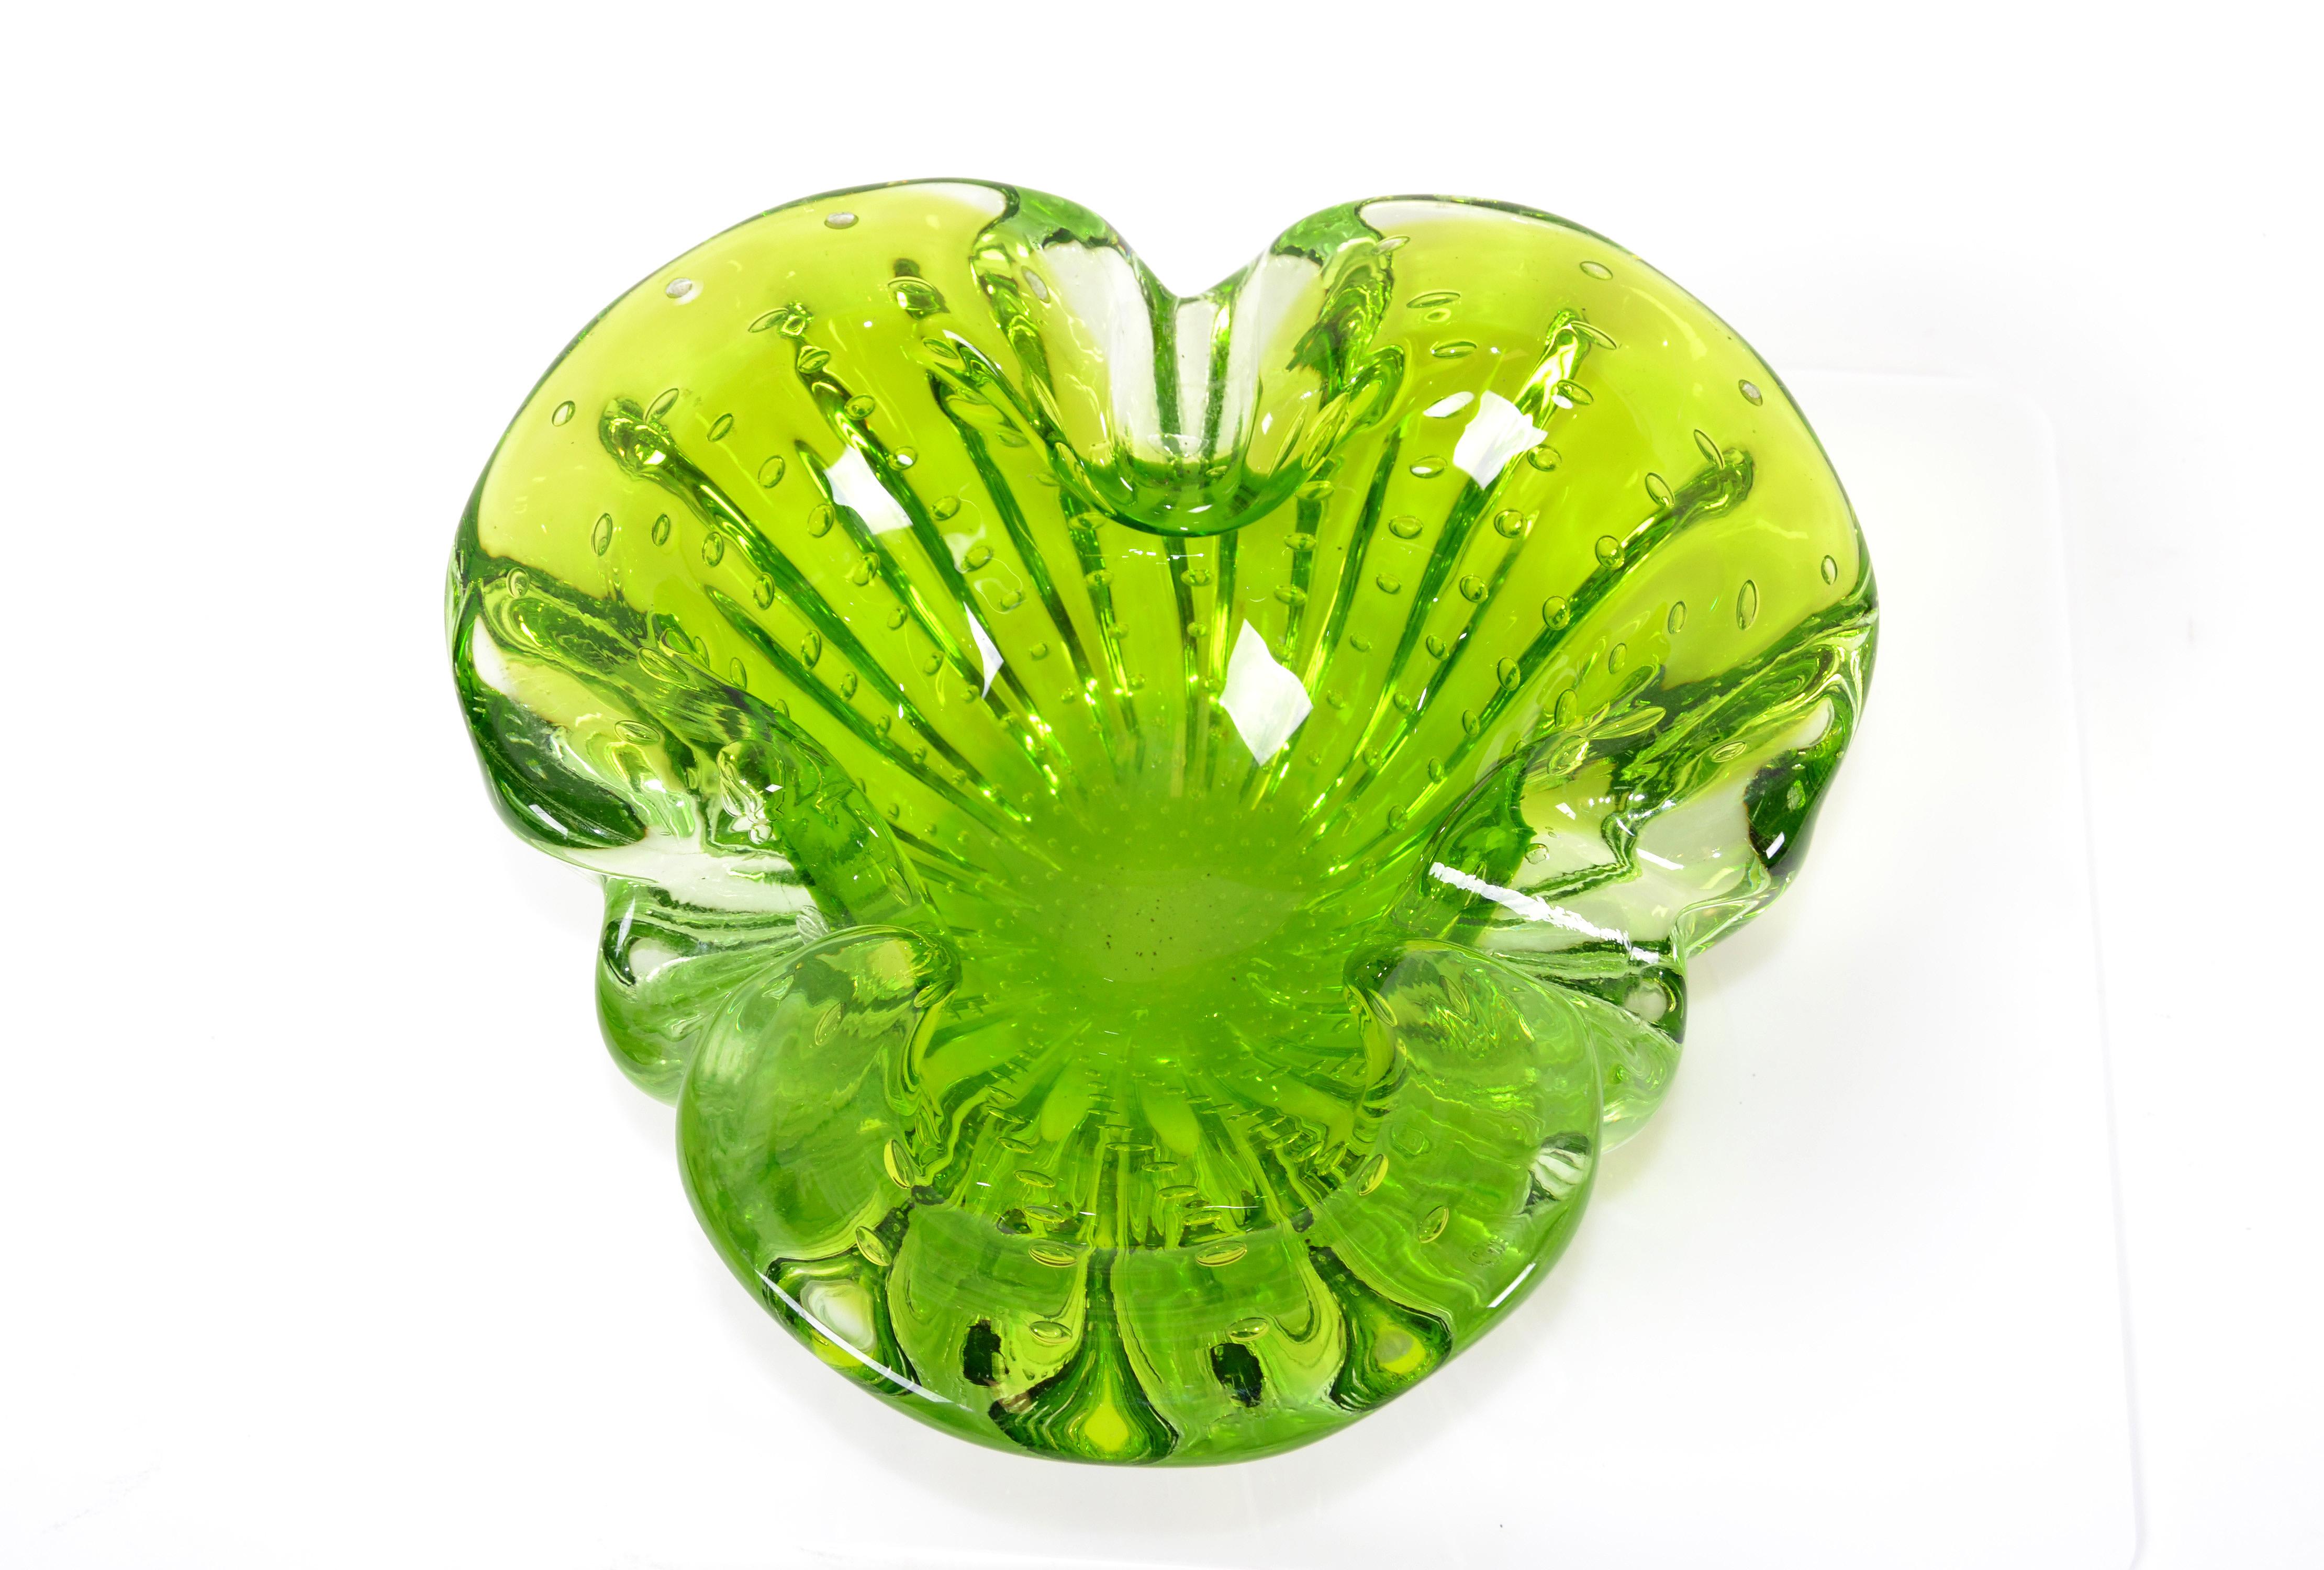 Late 20th Century Italian Blown Murano Glass Neon Green Controlled Bubble Catchall, Bowl, Ashtray